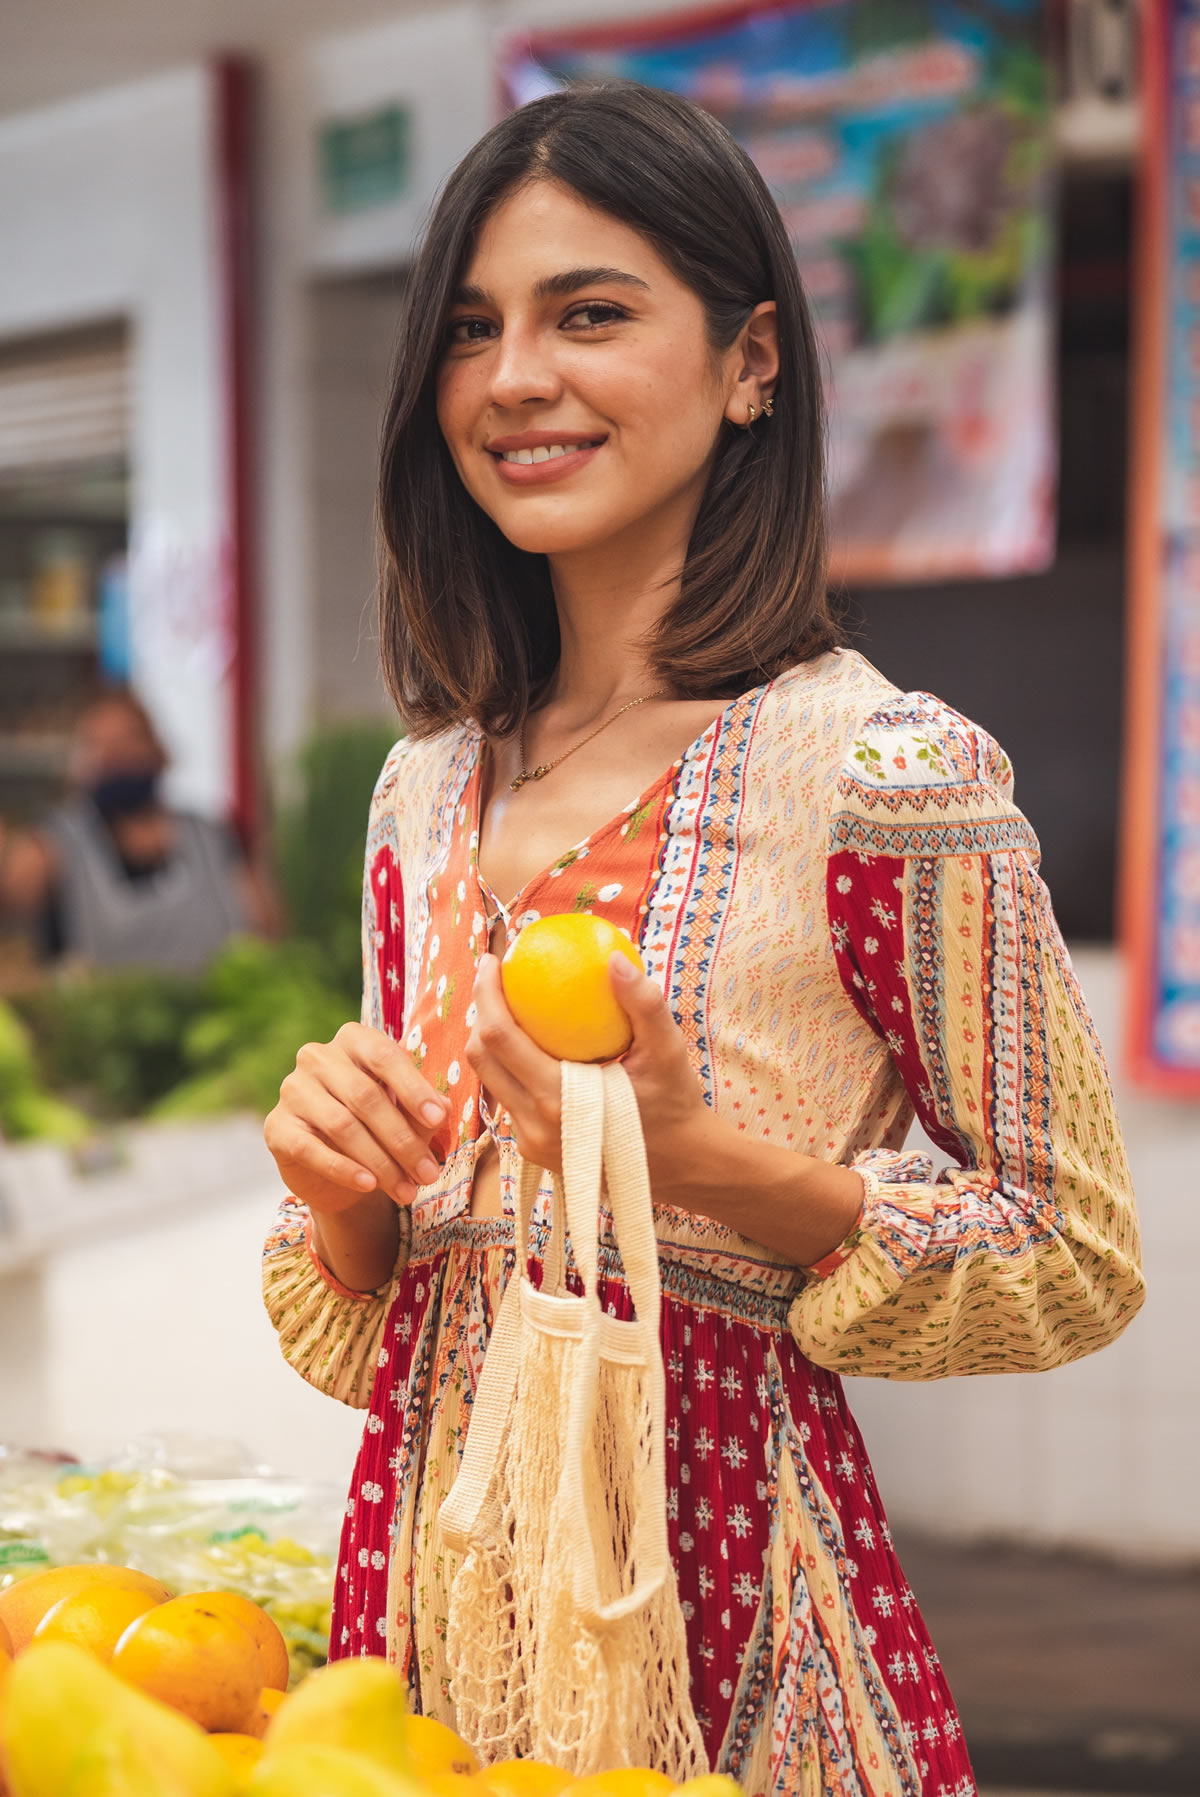 Una mujer comprando naranjas